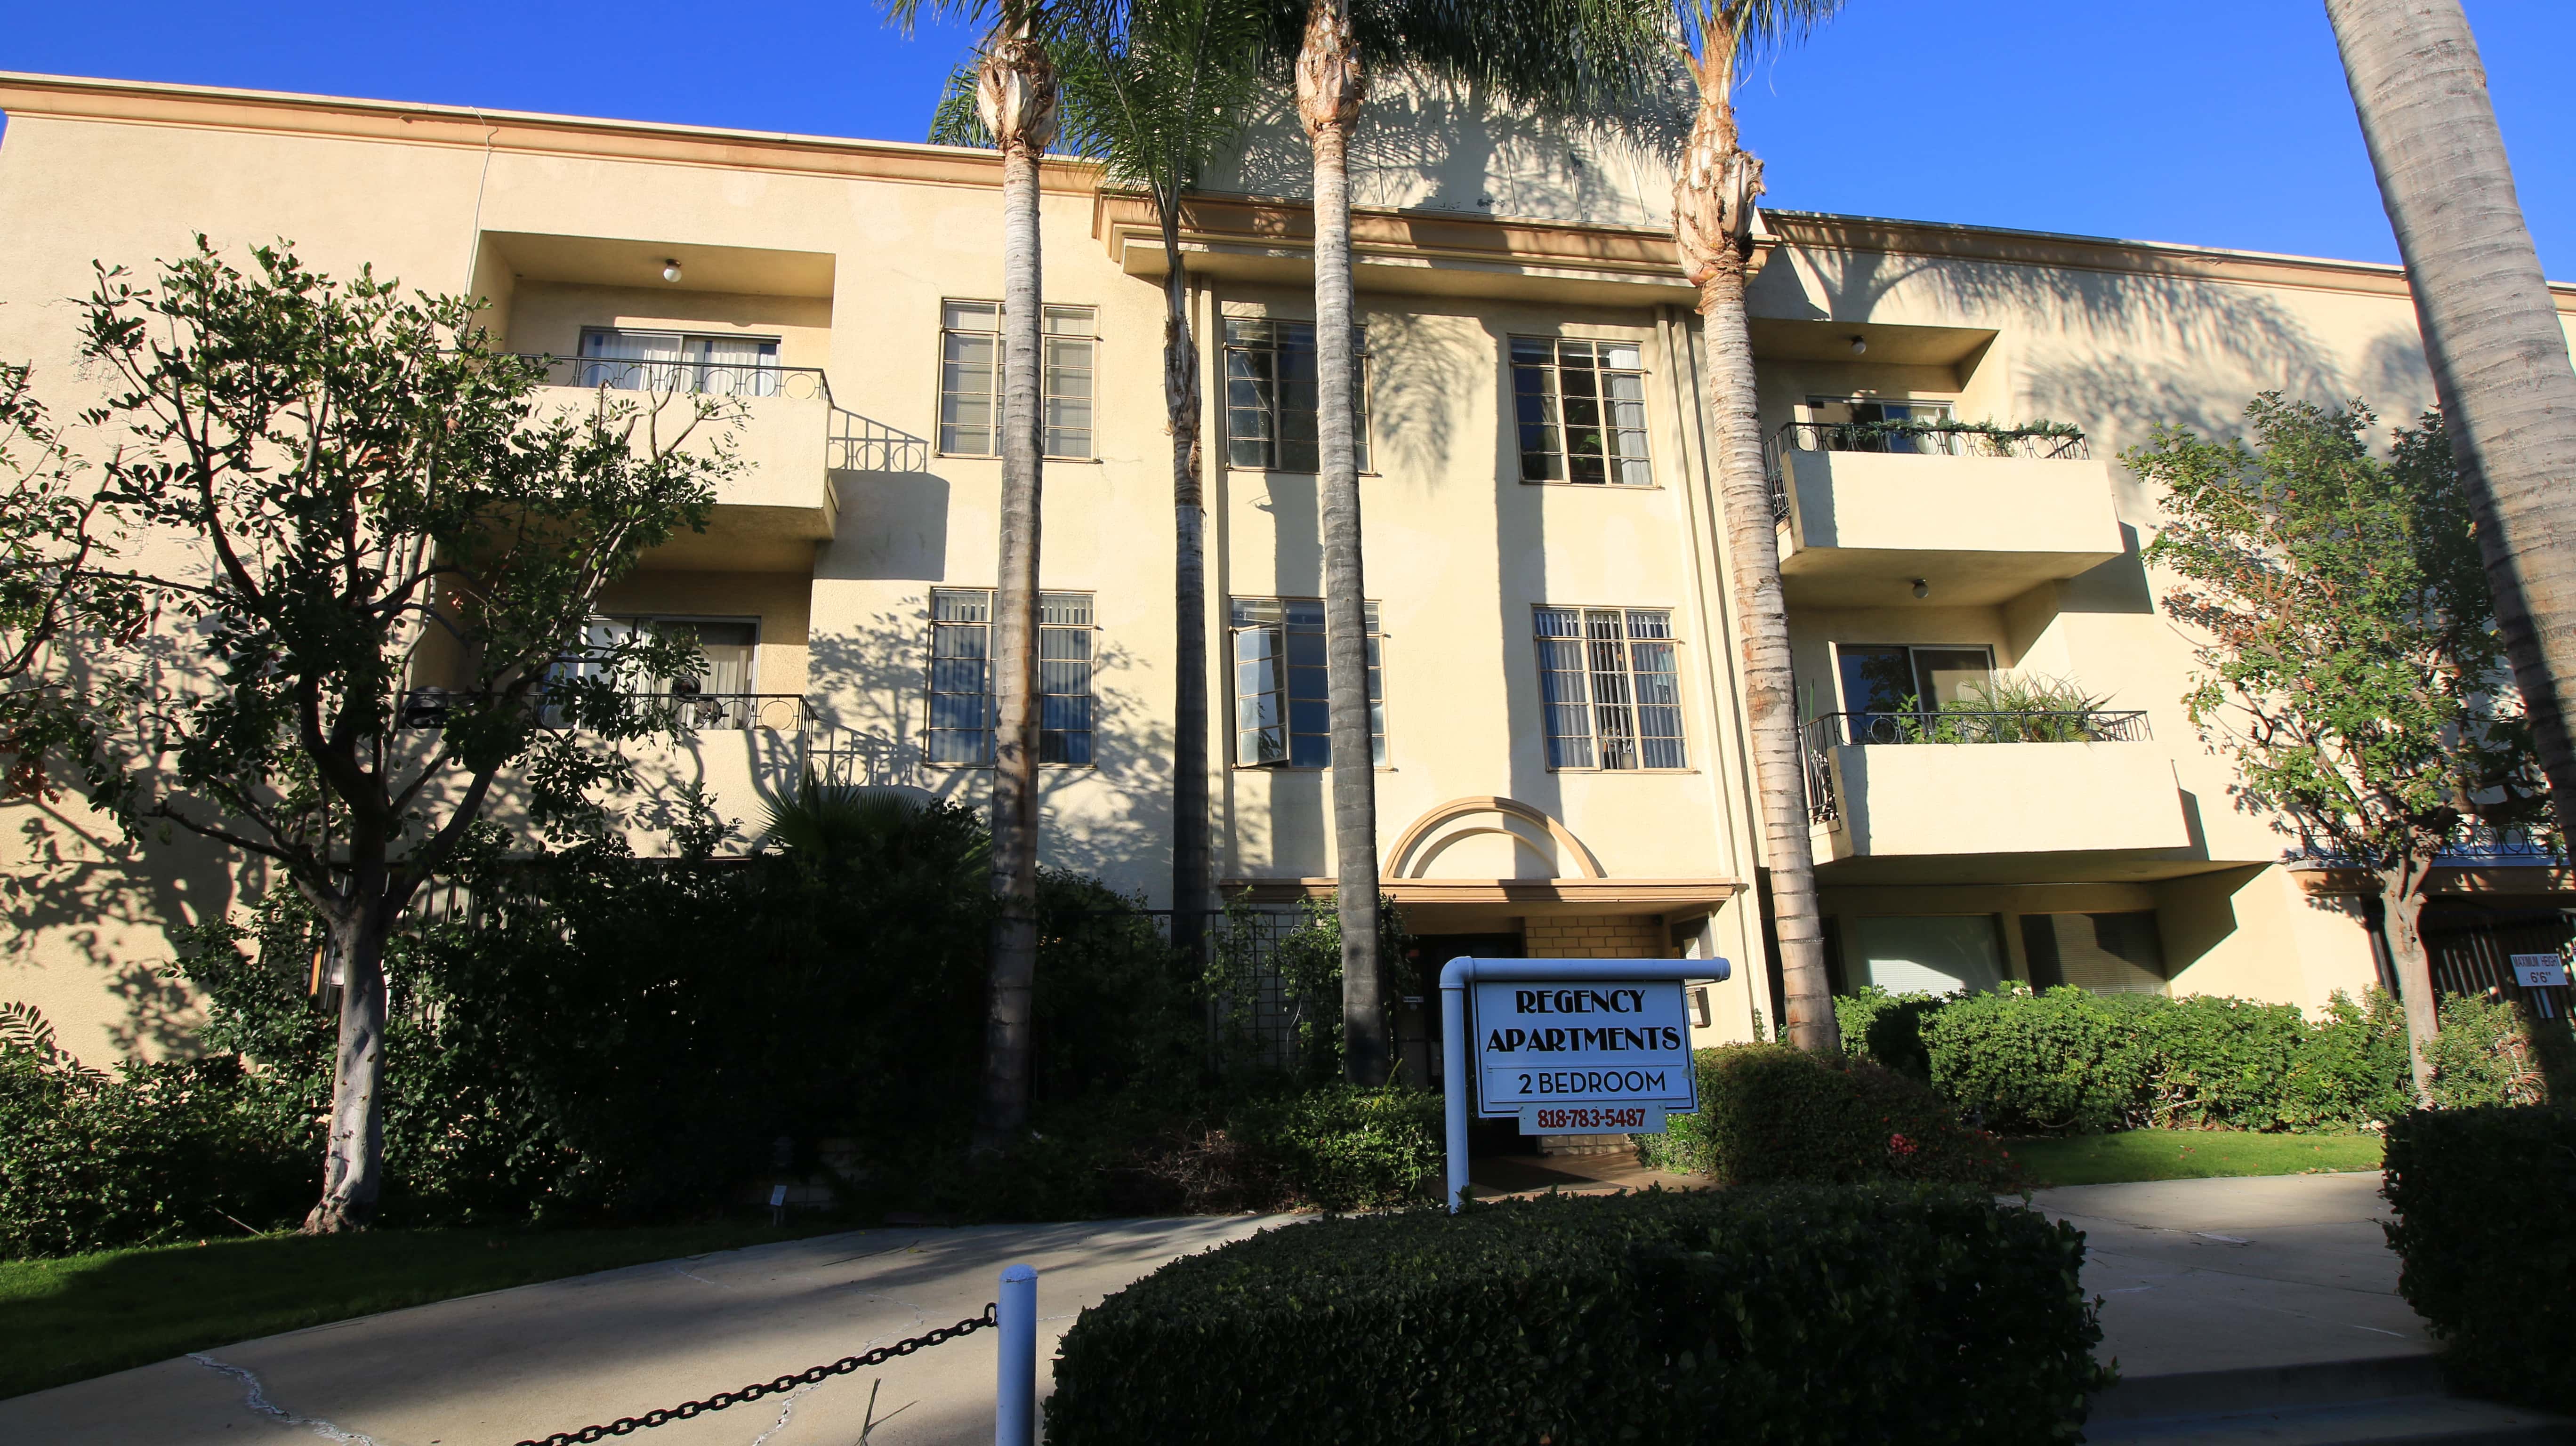 Regency Apartments - Sherman Oaks (CA 91423), US, 2 bedroom apartments for rent